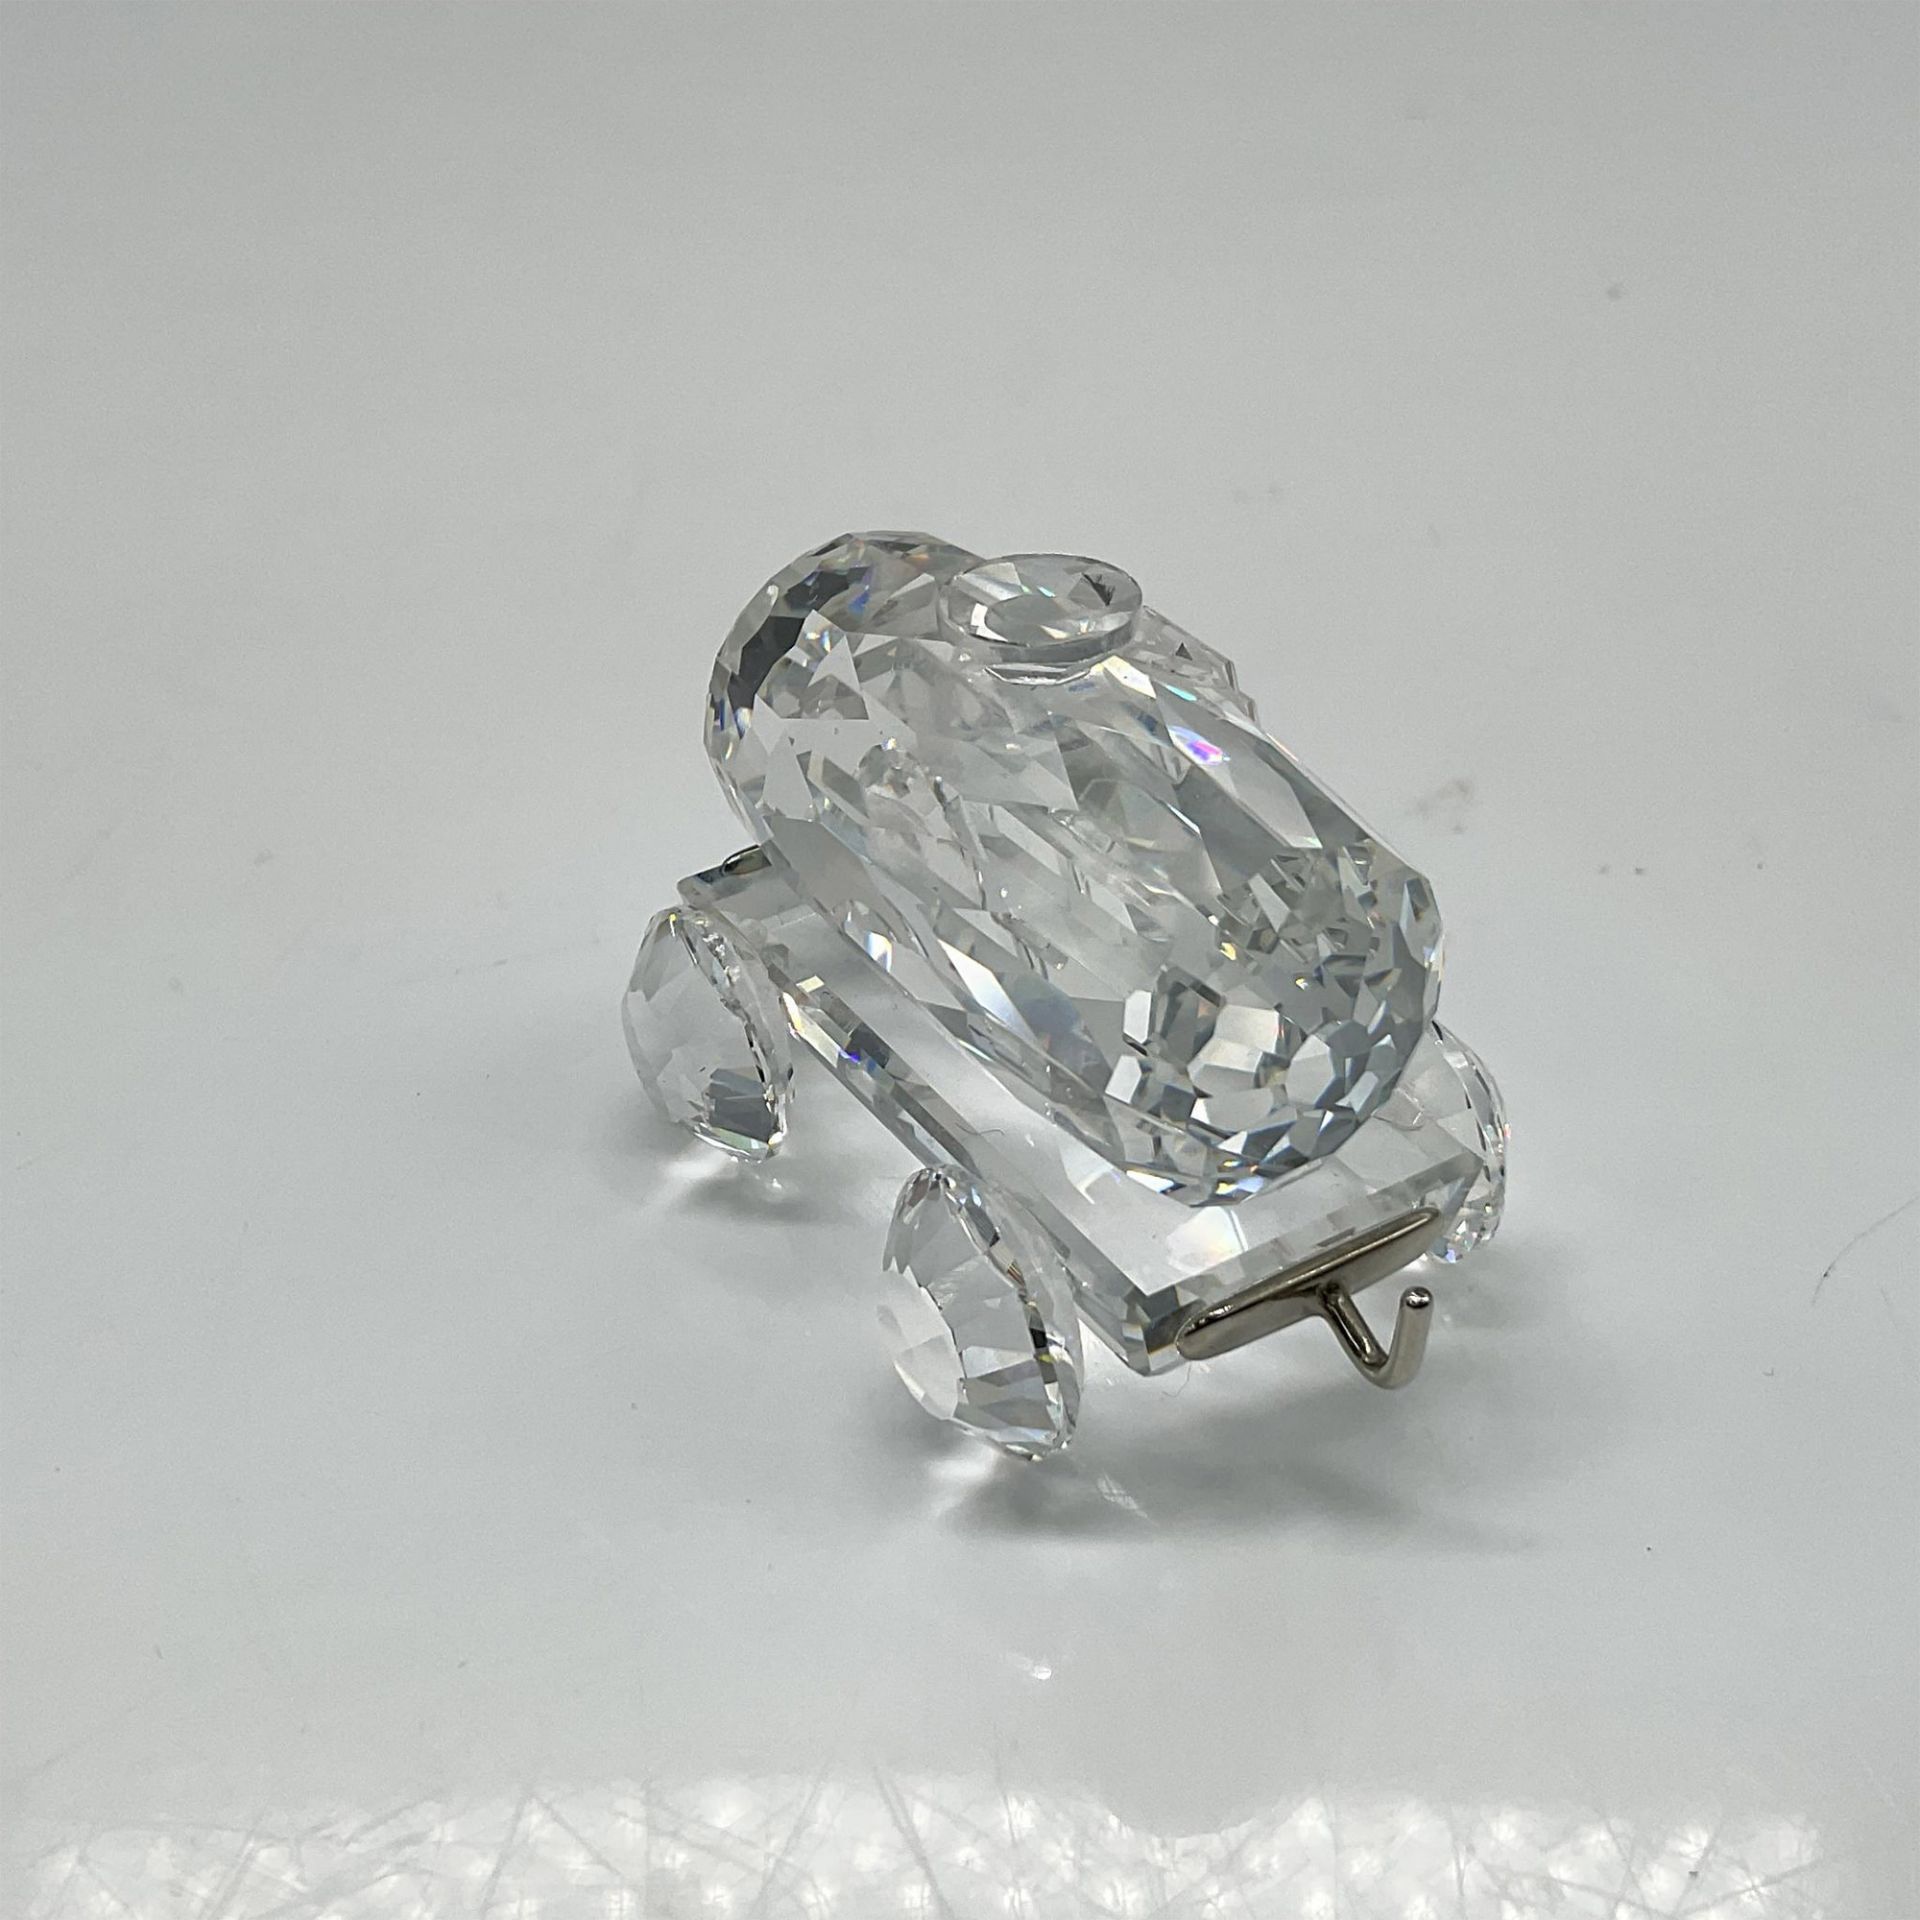 Swarovski Silver Crystal Figurine, Tank Wagon - Image 2 of 4